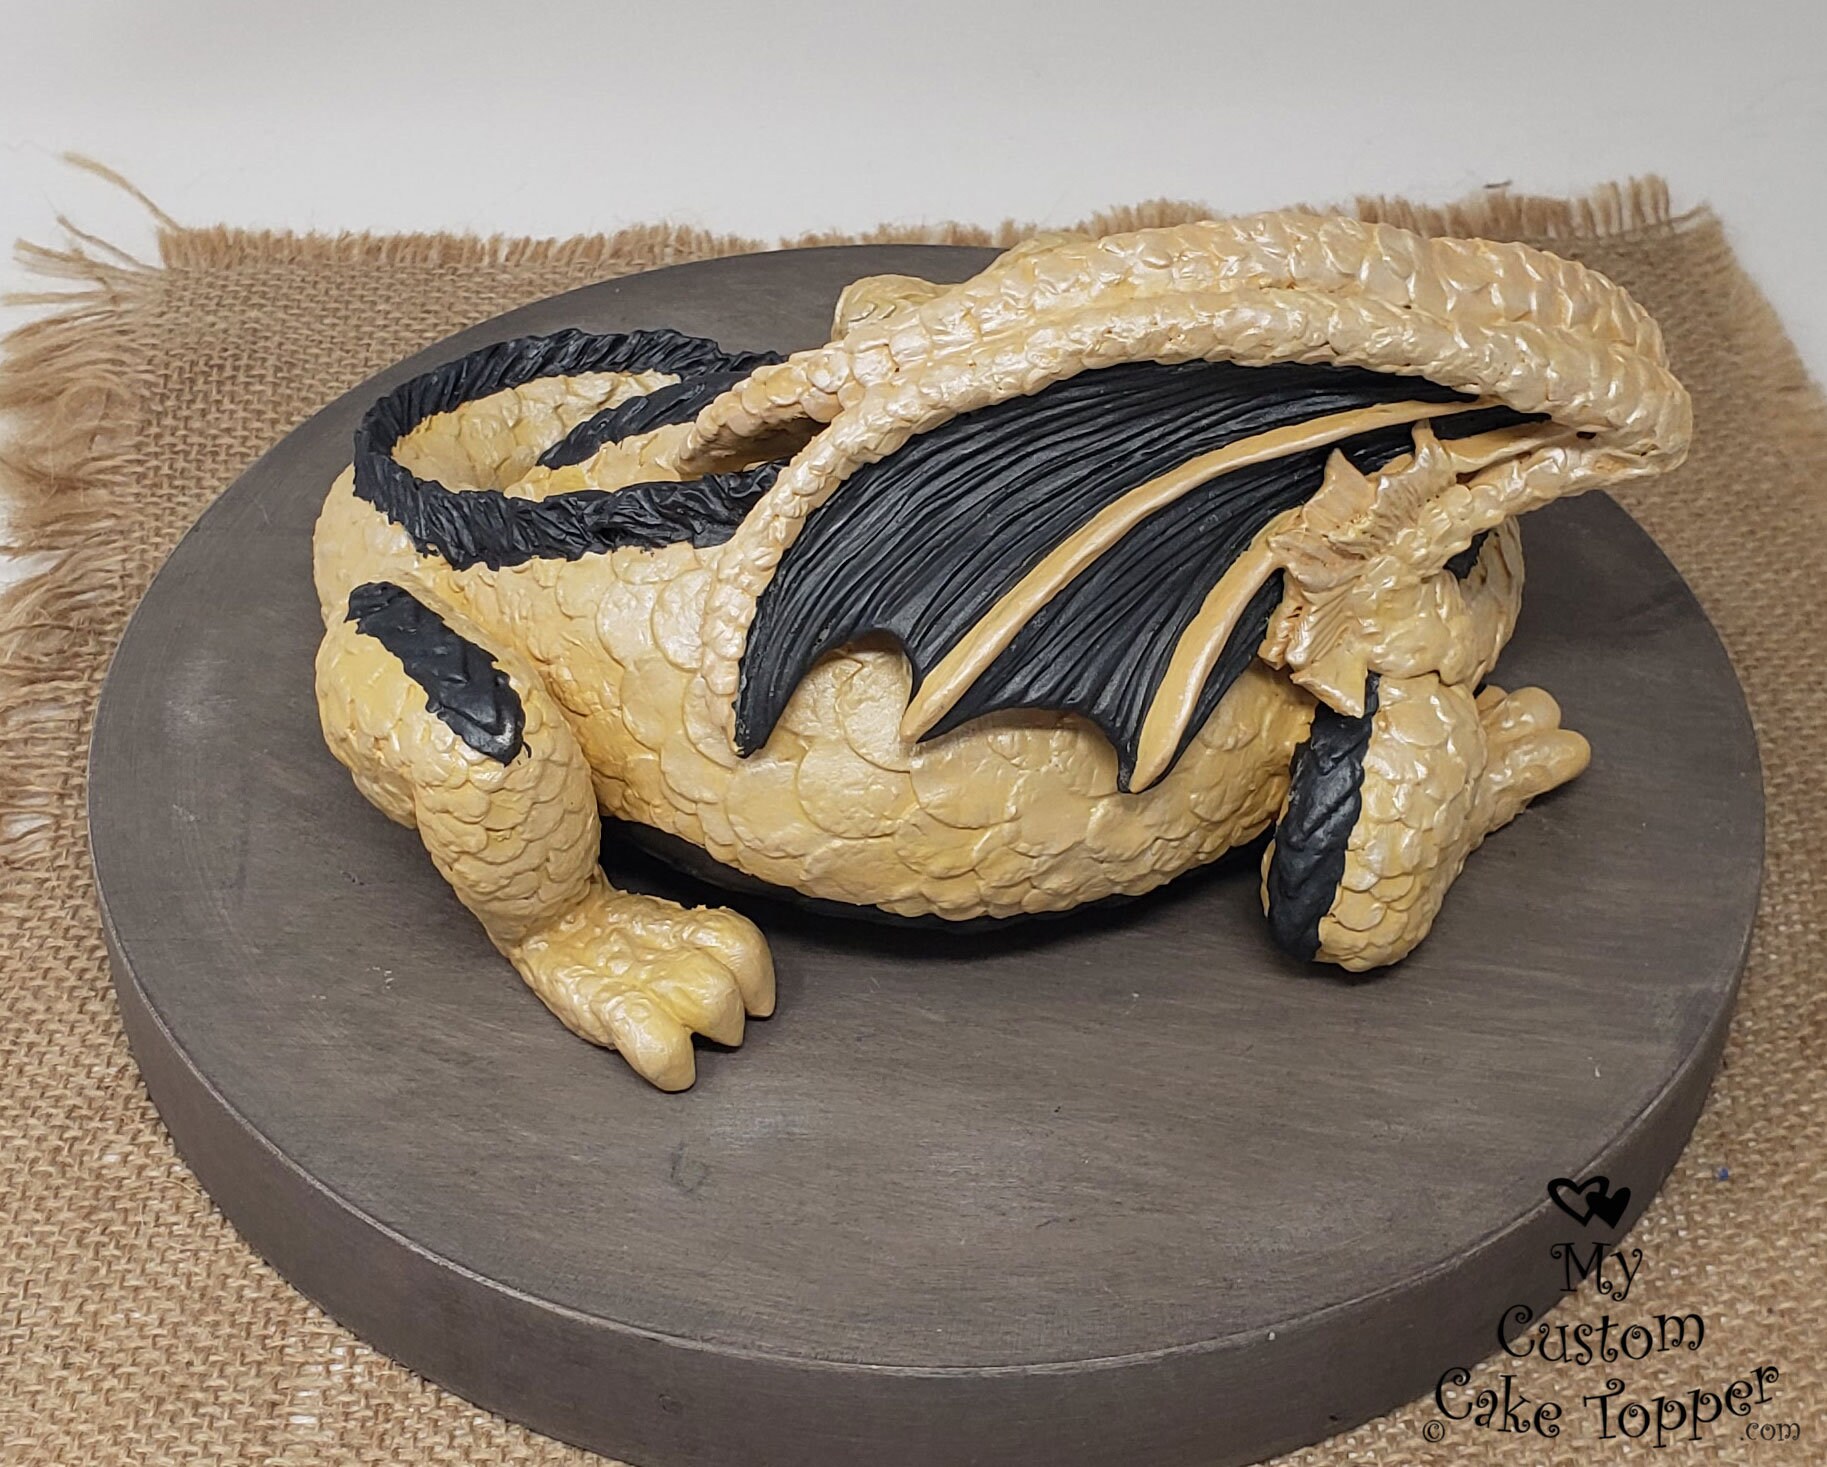 Phil's Hobby Stop - Sleeping Dragon Cake Pan (As seen on Facebook